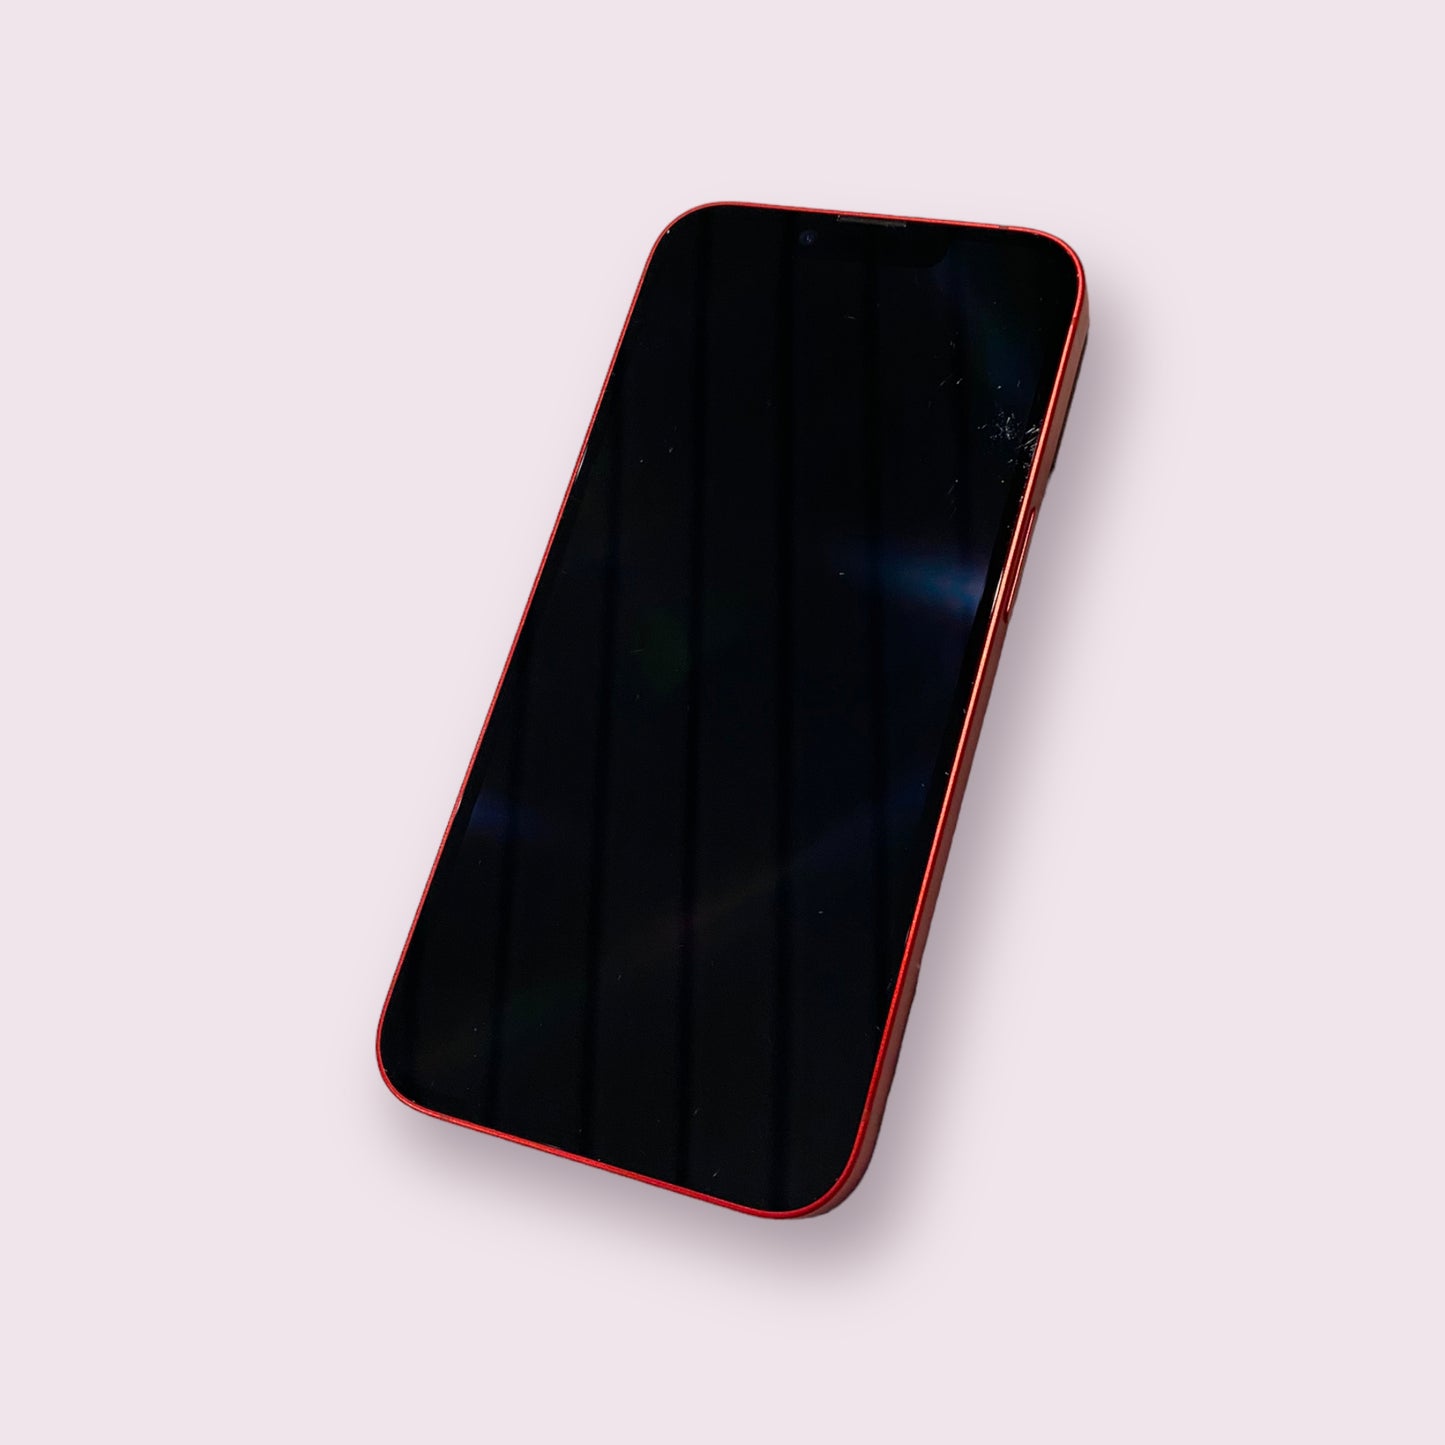 Apple iPhone 14 128GB Red IOS Smartphone - Unlocked - Grade B